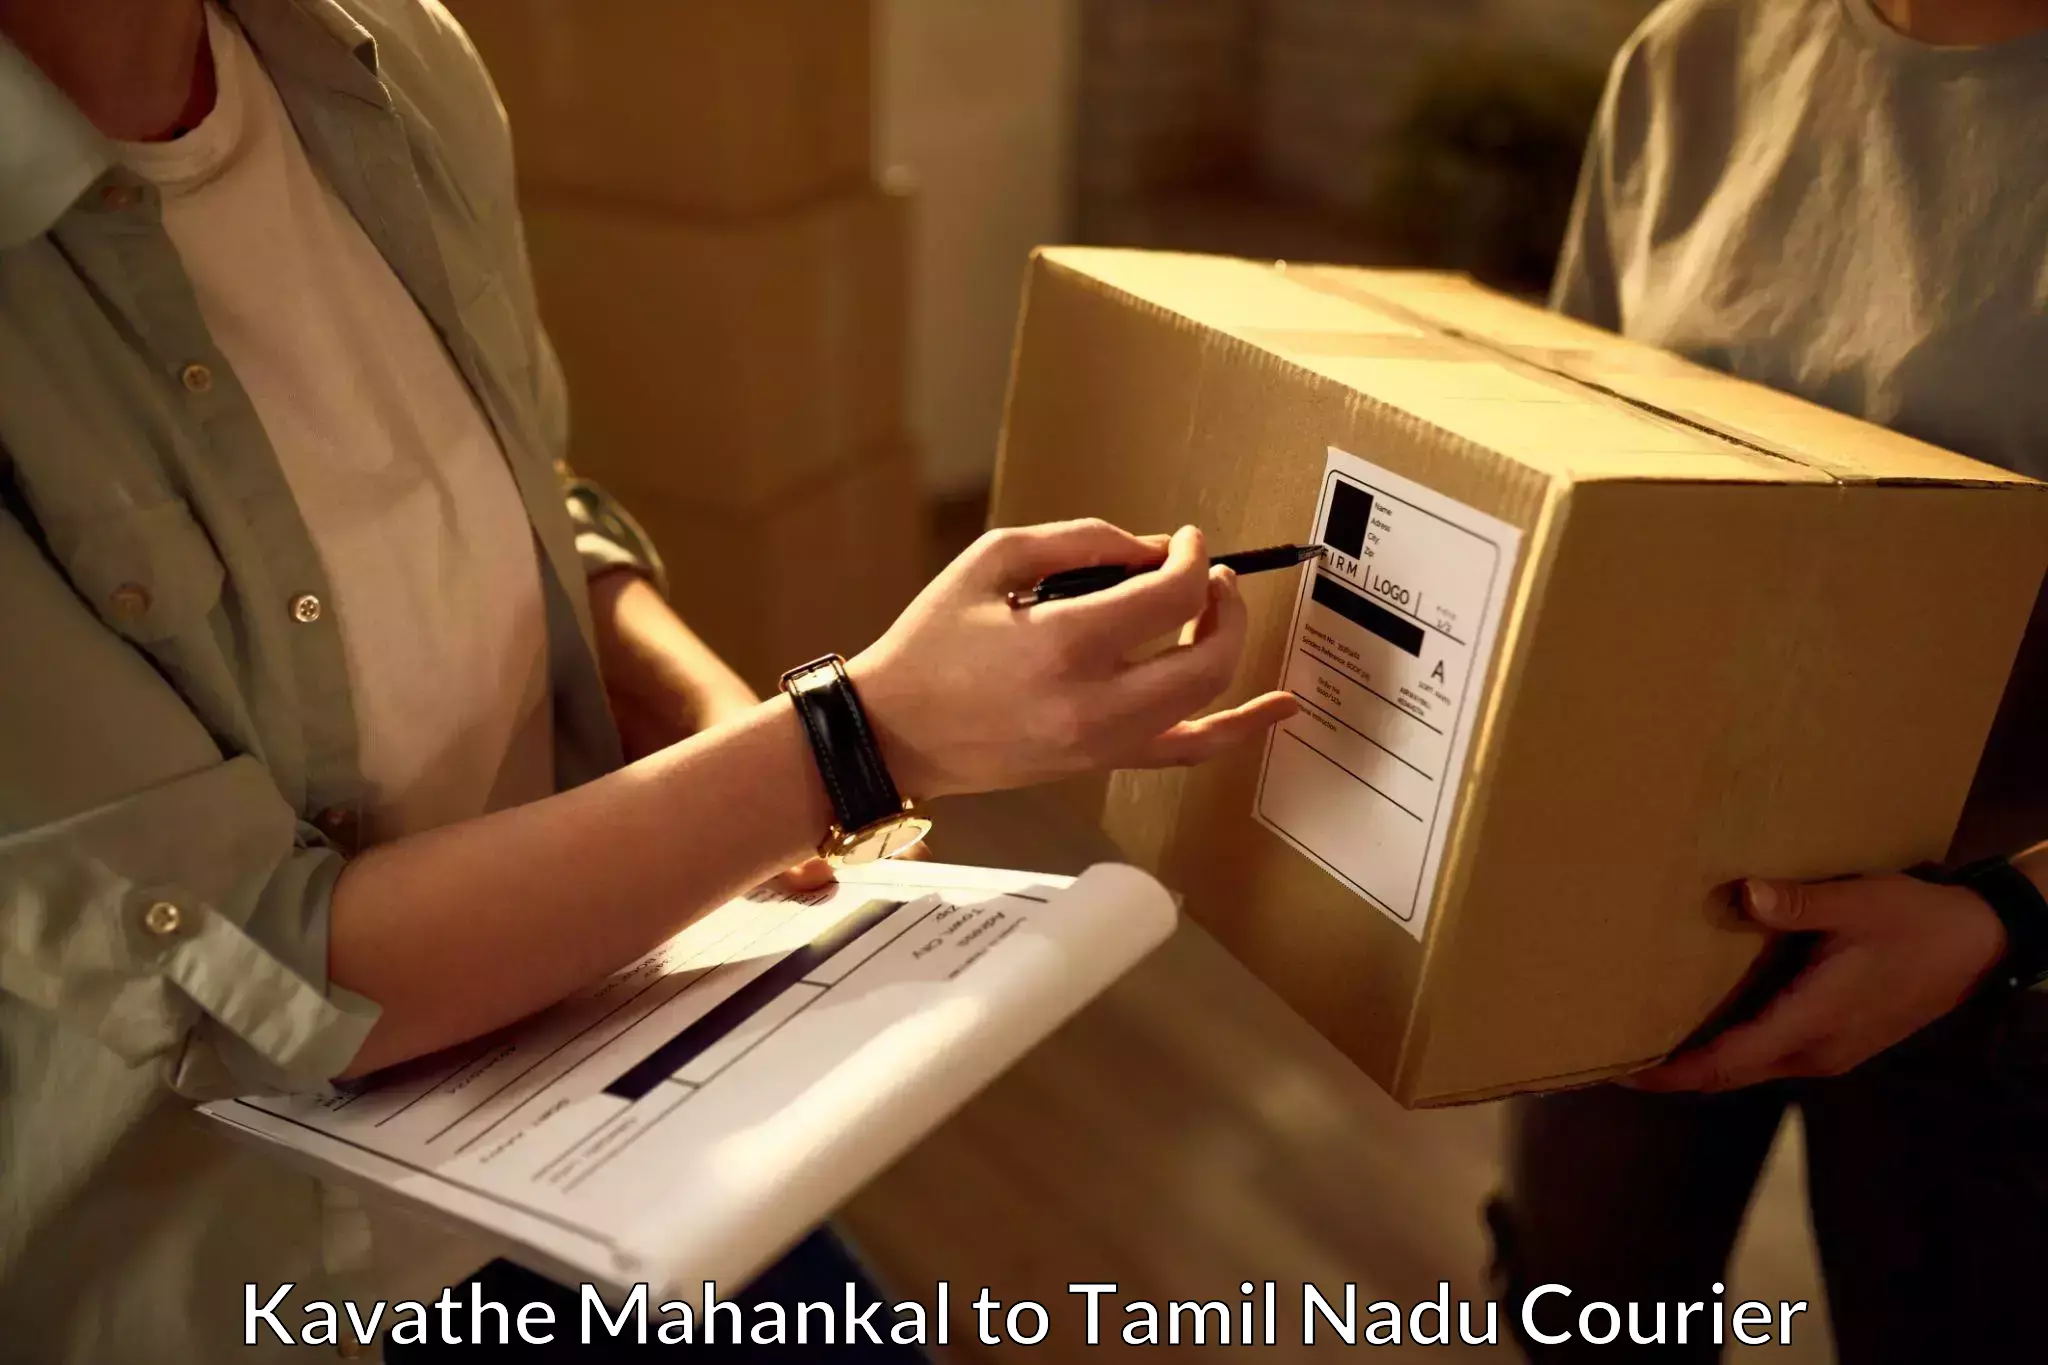 Affordable logistics services Kavathe Mahankal to The Gandhigram Rural Institute